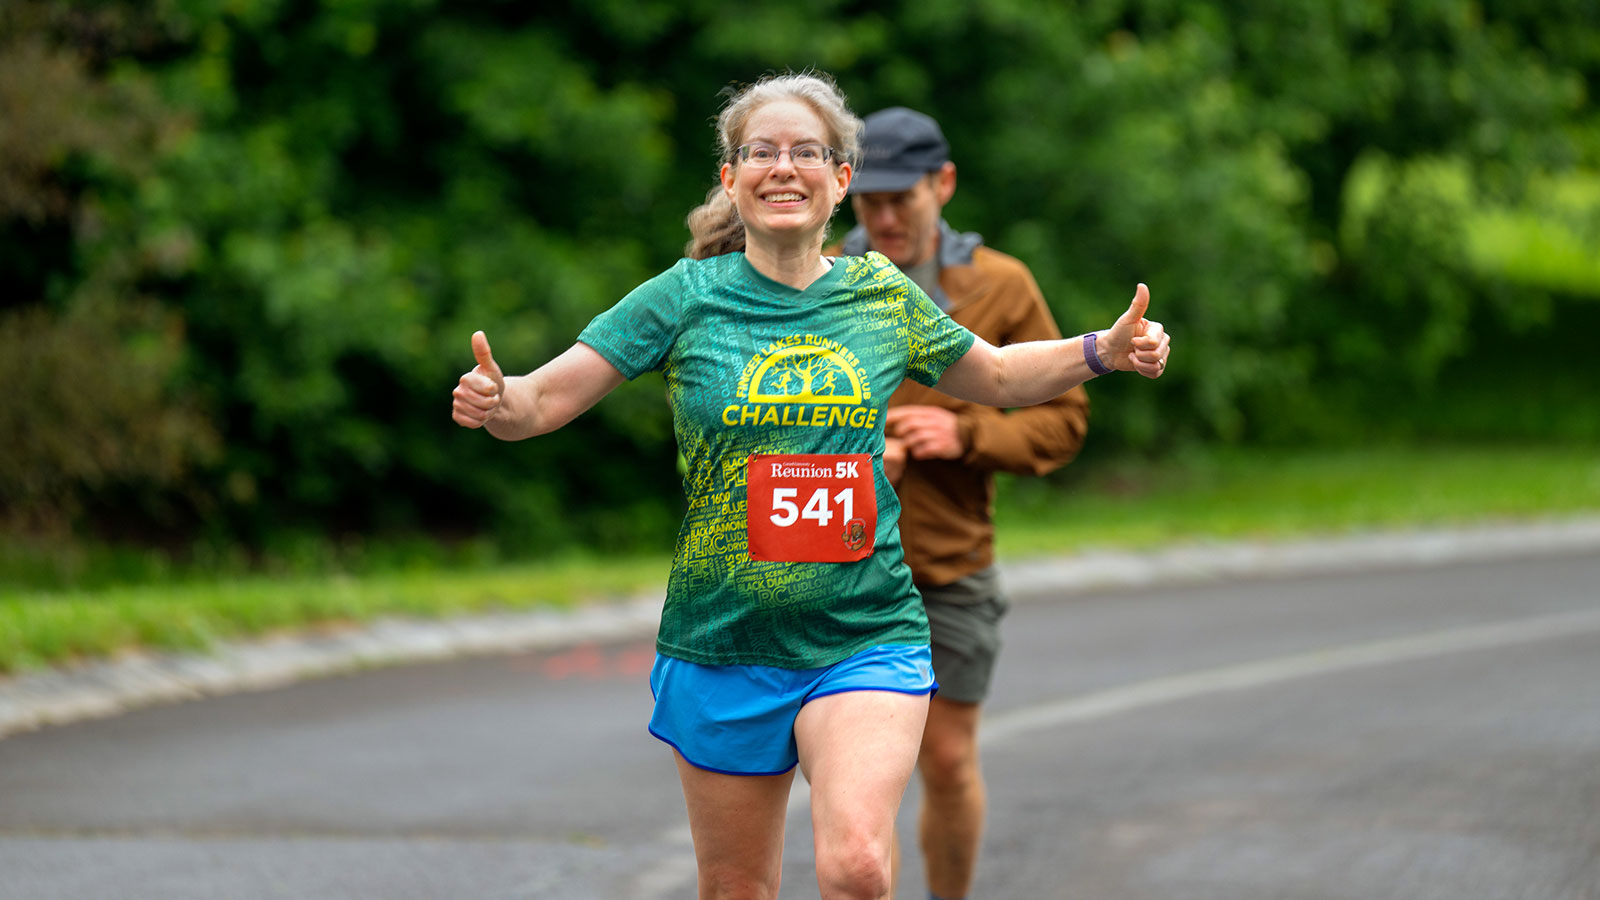 a participant in the Reunion 5K Run